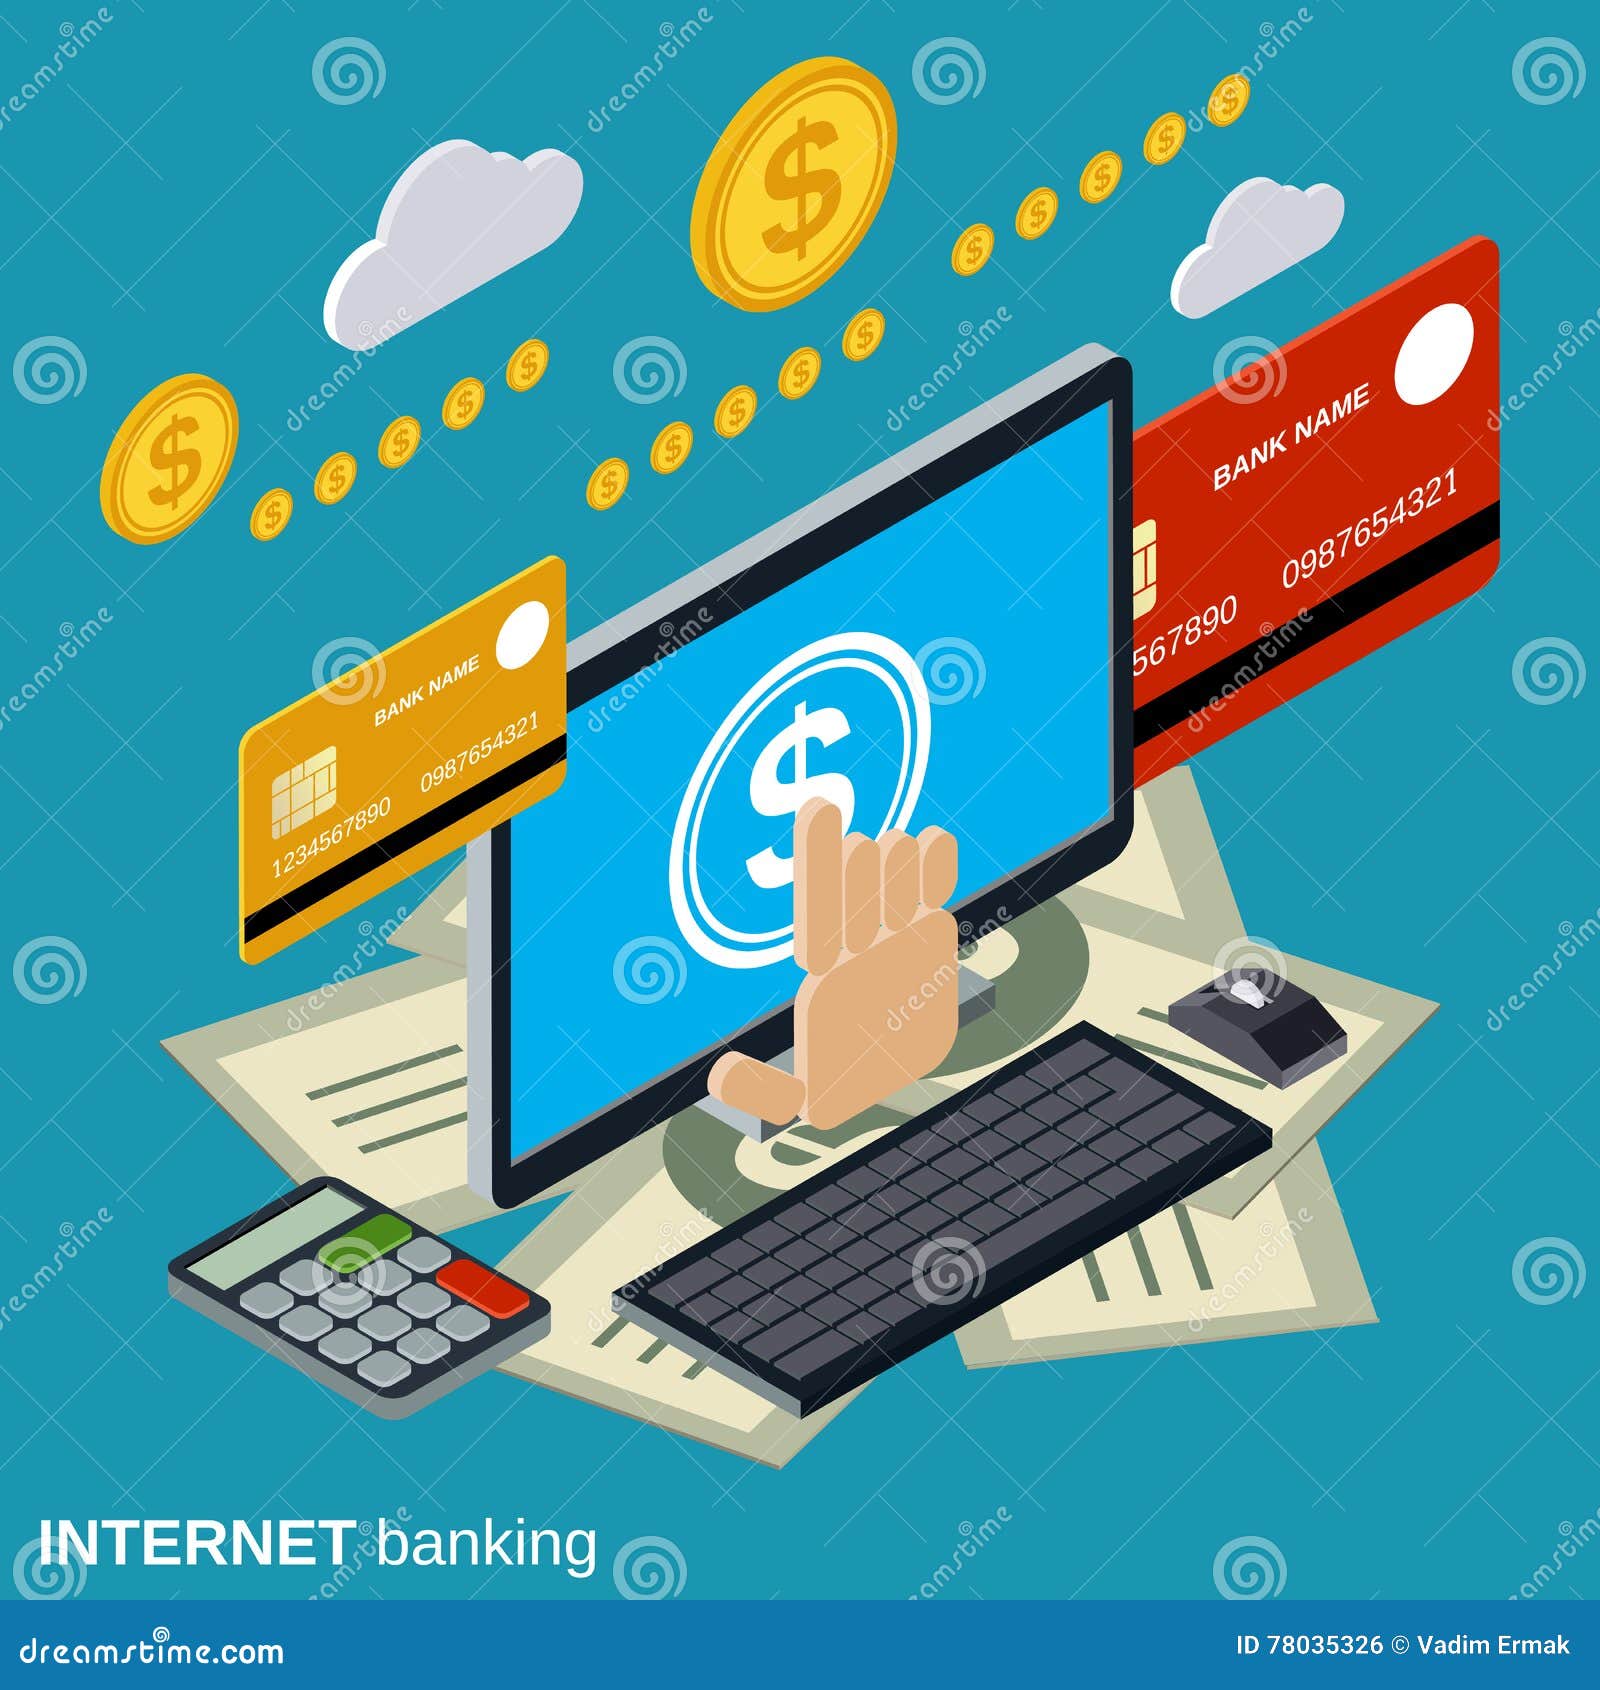 Abb bank internet banking. Интернет банкинг. Интернет банкинг картинки. Интернет банкинг иллюстрация. Иллюстрация интернет банкинга.